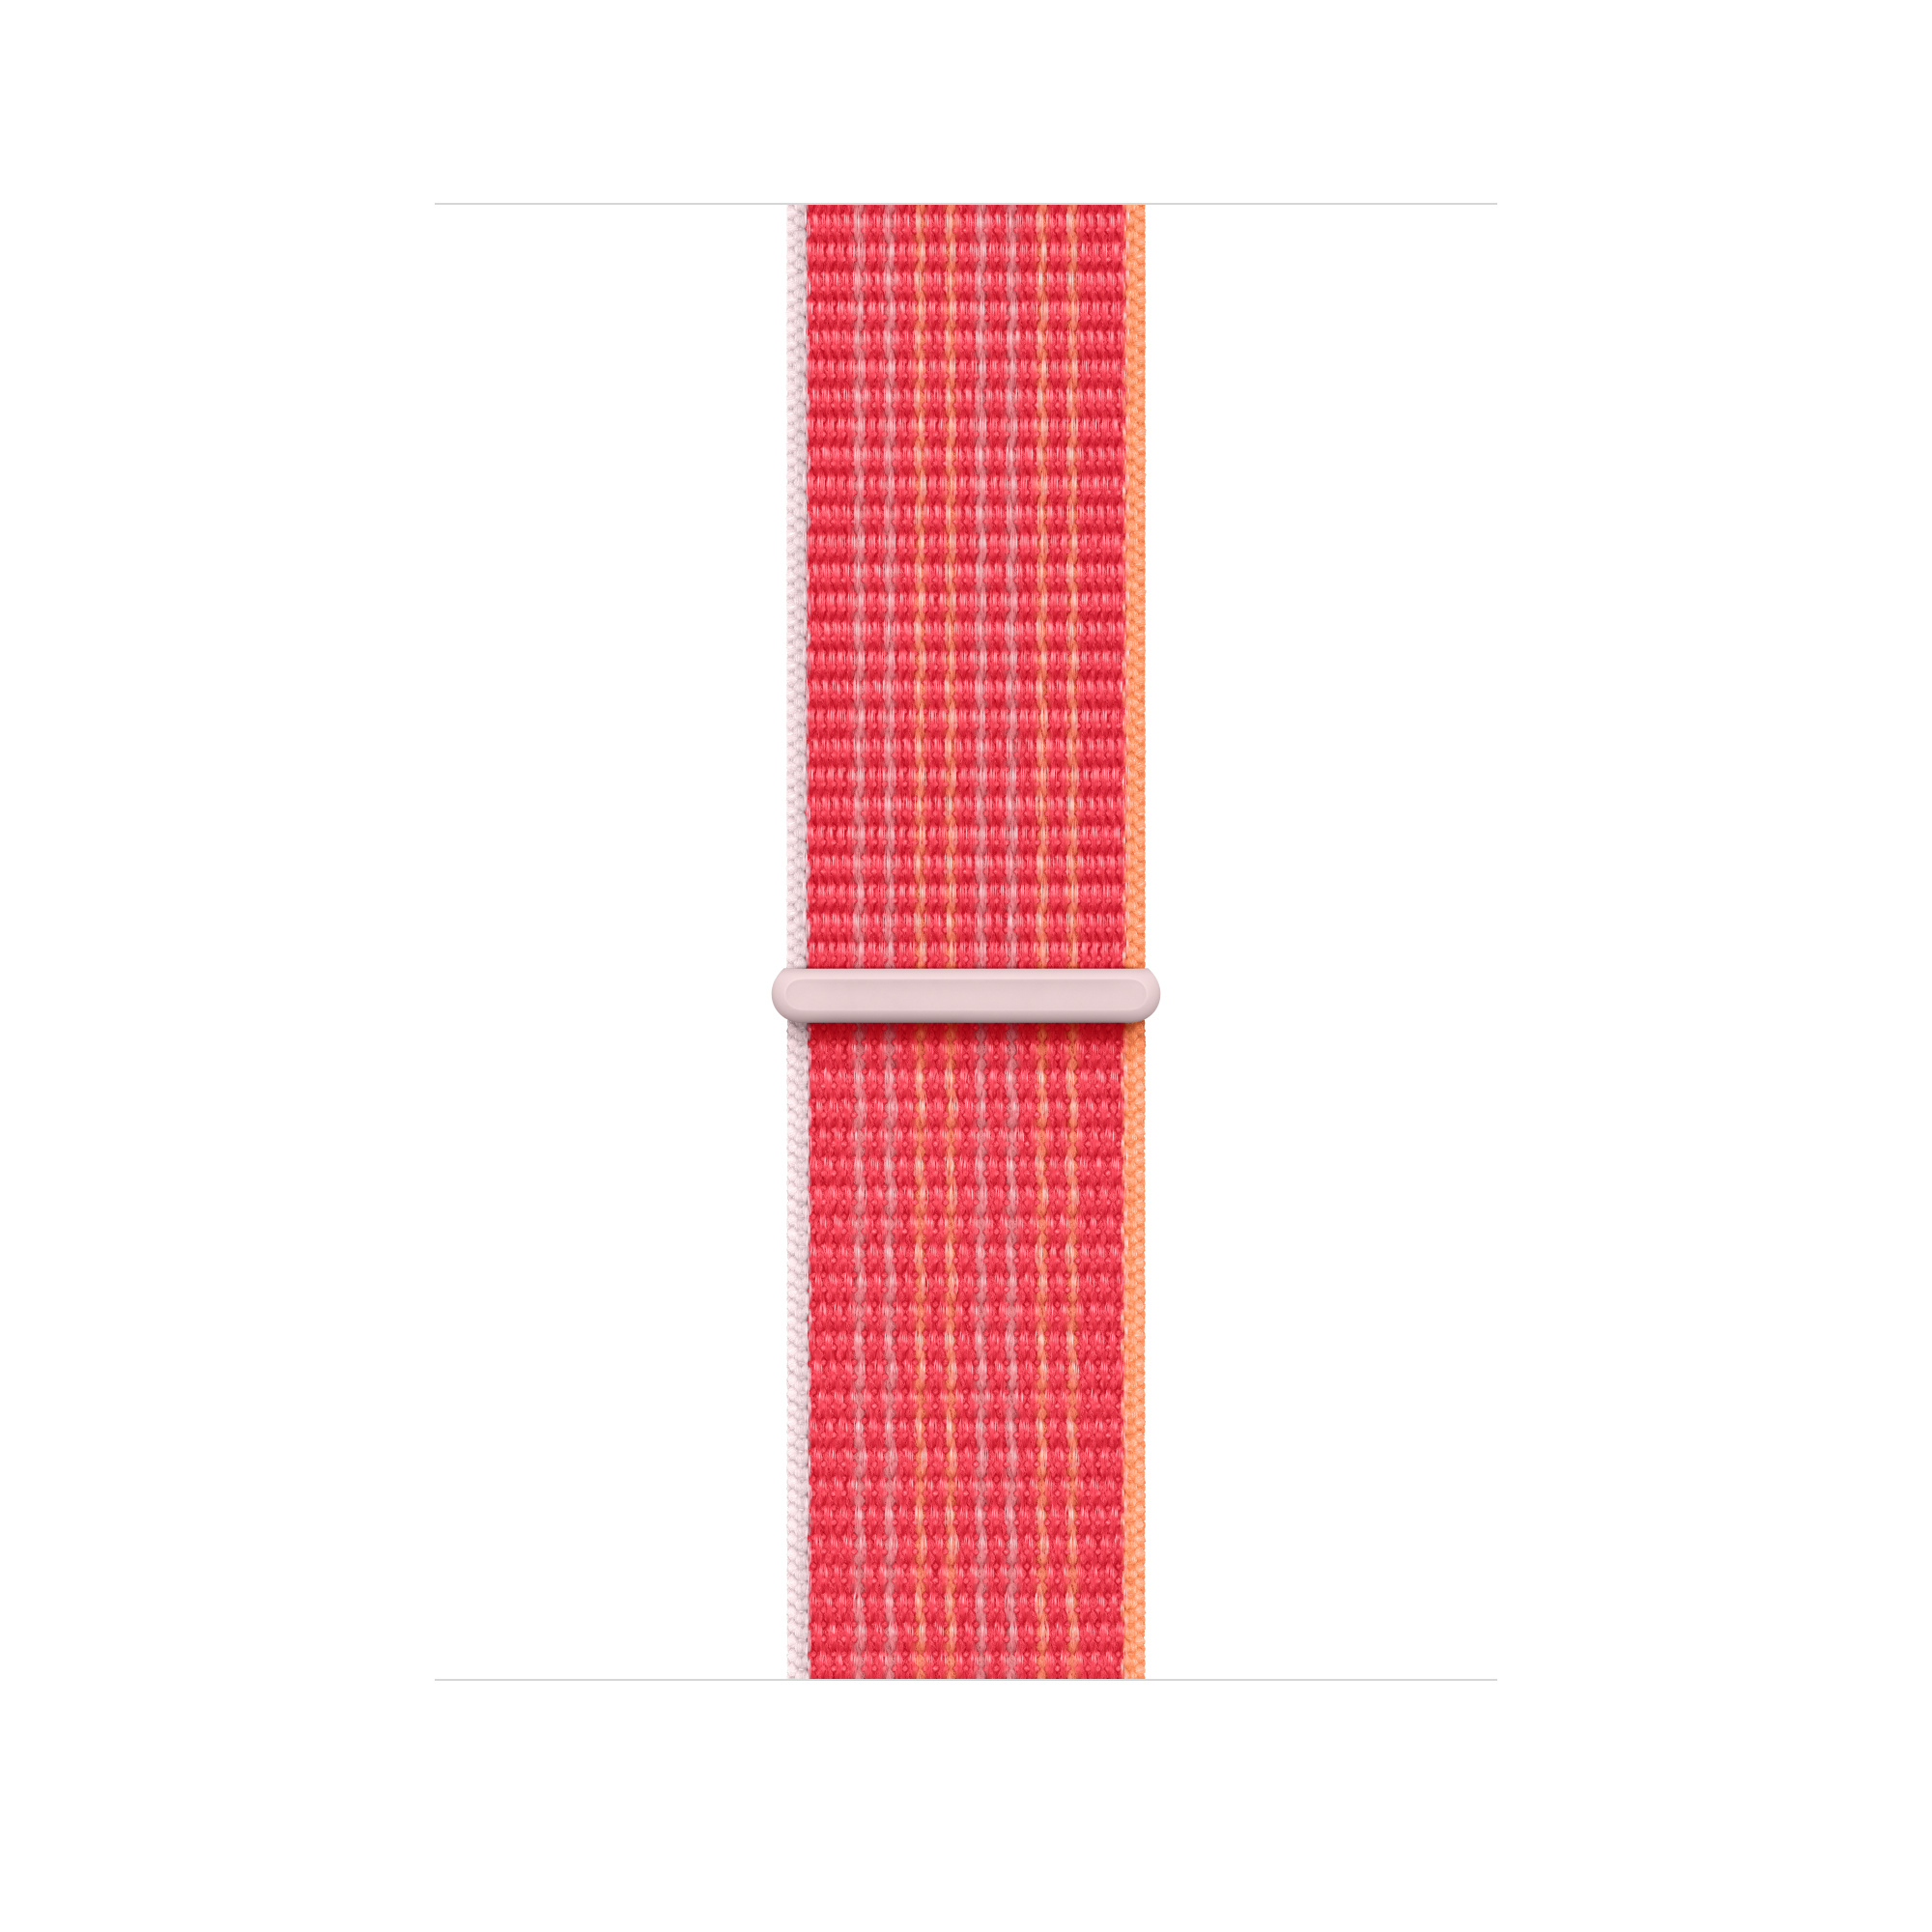 Apple (PRODUCT) RED - Uhrarmband für Smartwatch